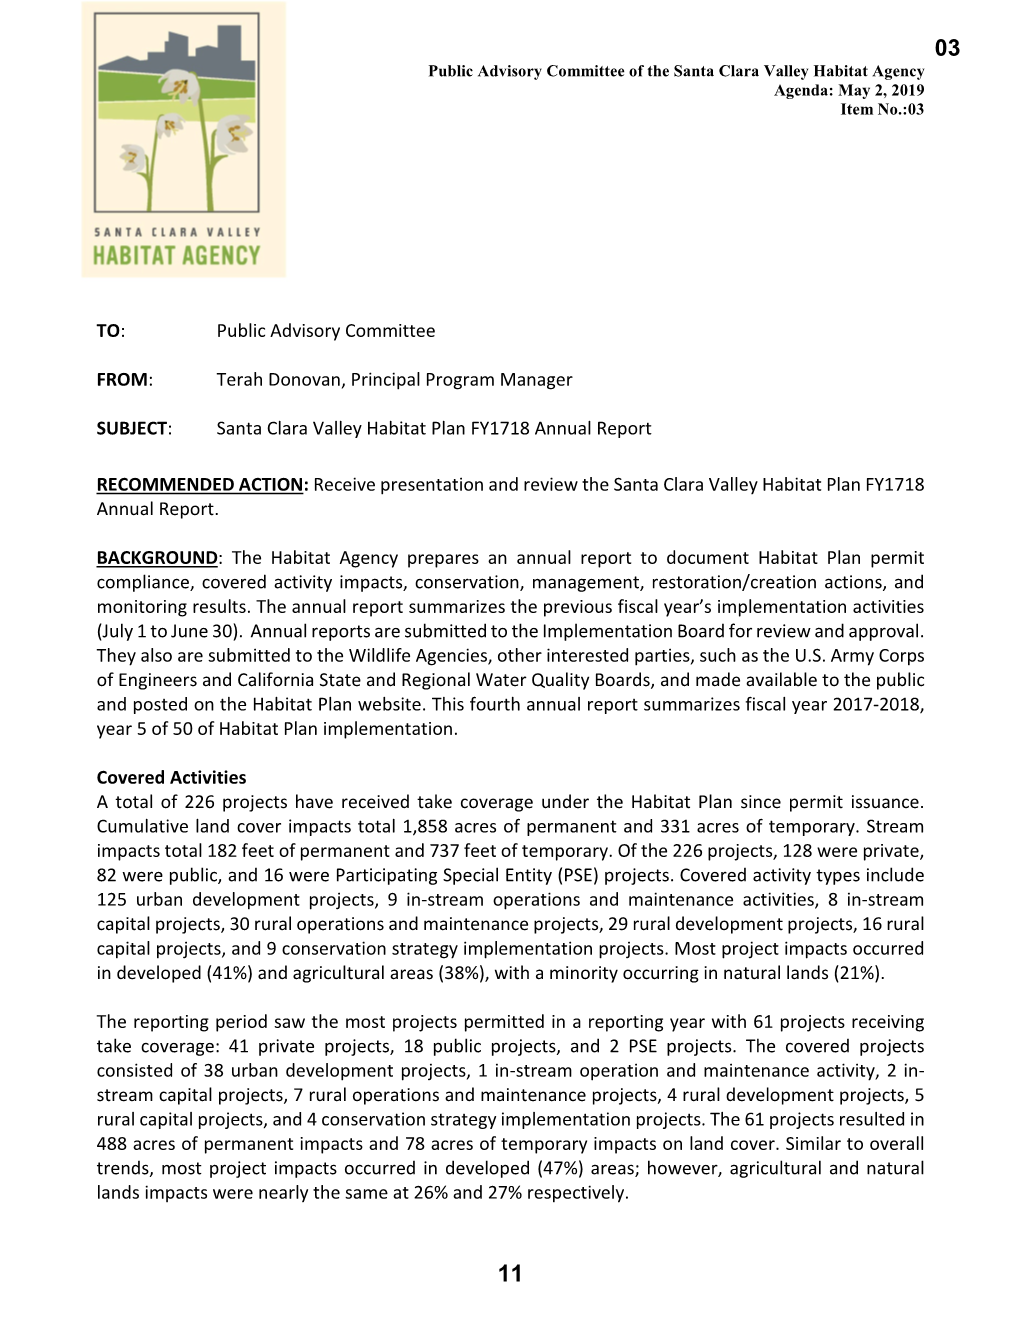 Santa Clara Valley Habitat Plan FY1718 Annual Report